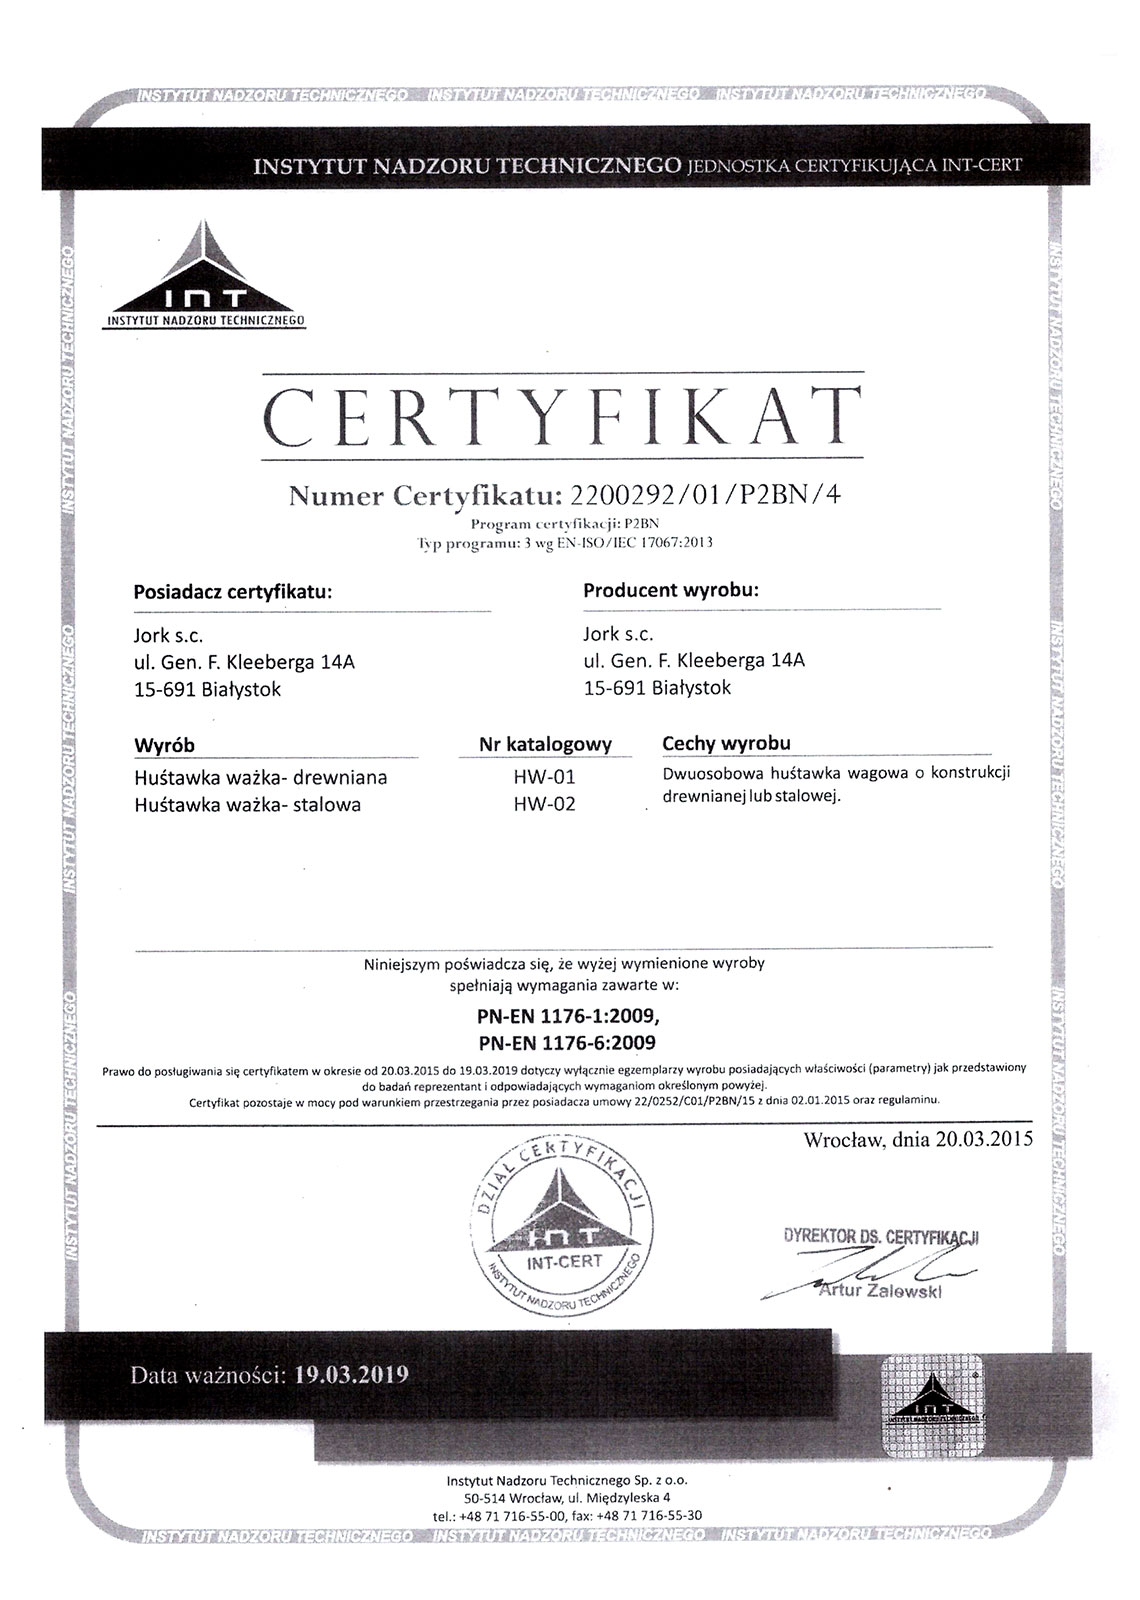 certyfikat-hustawka-waka